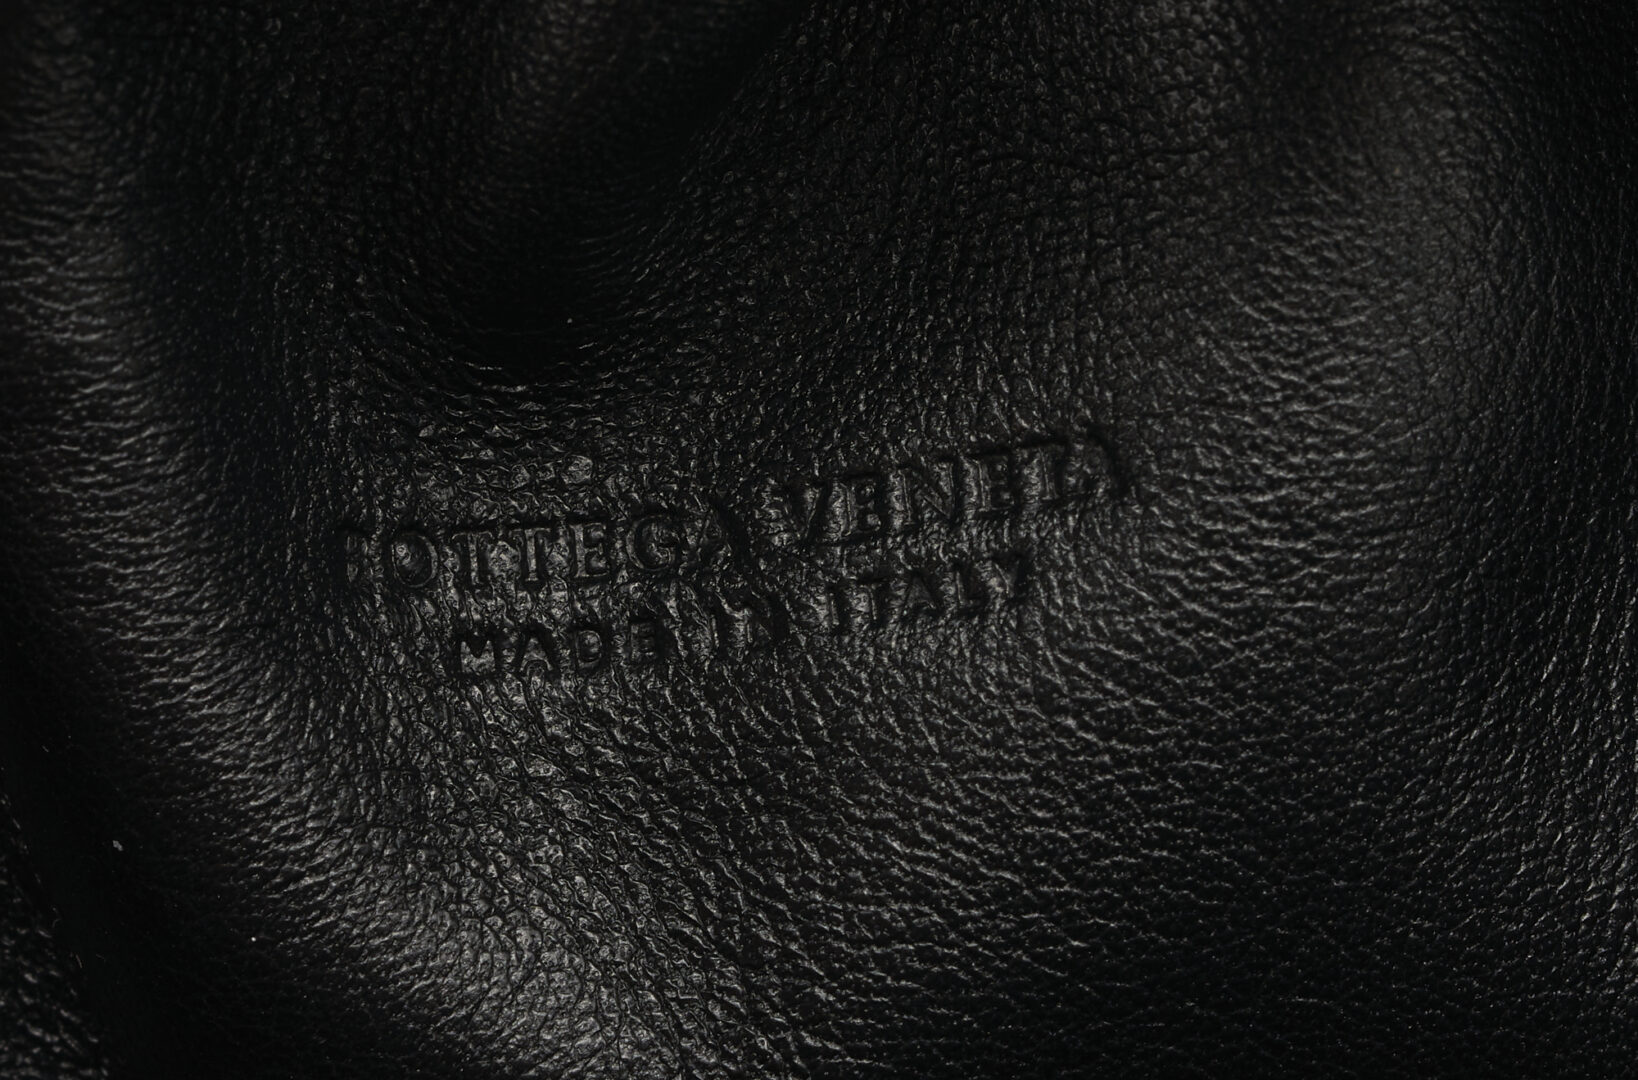 Lot 1182: Bottega Veneta The Pouch Mini Shoulder Bag